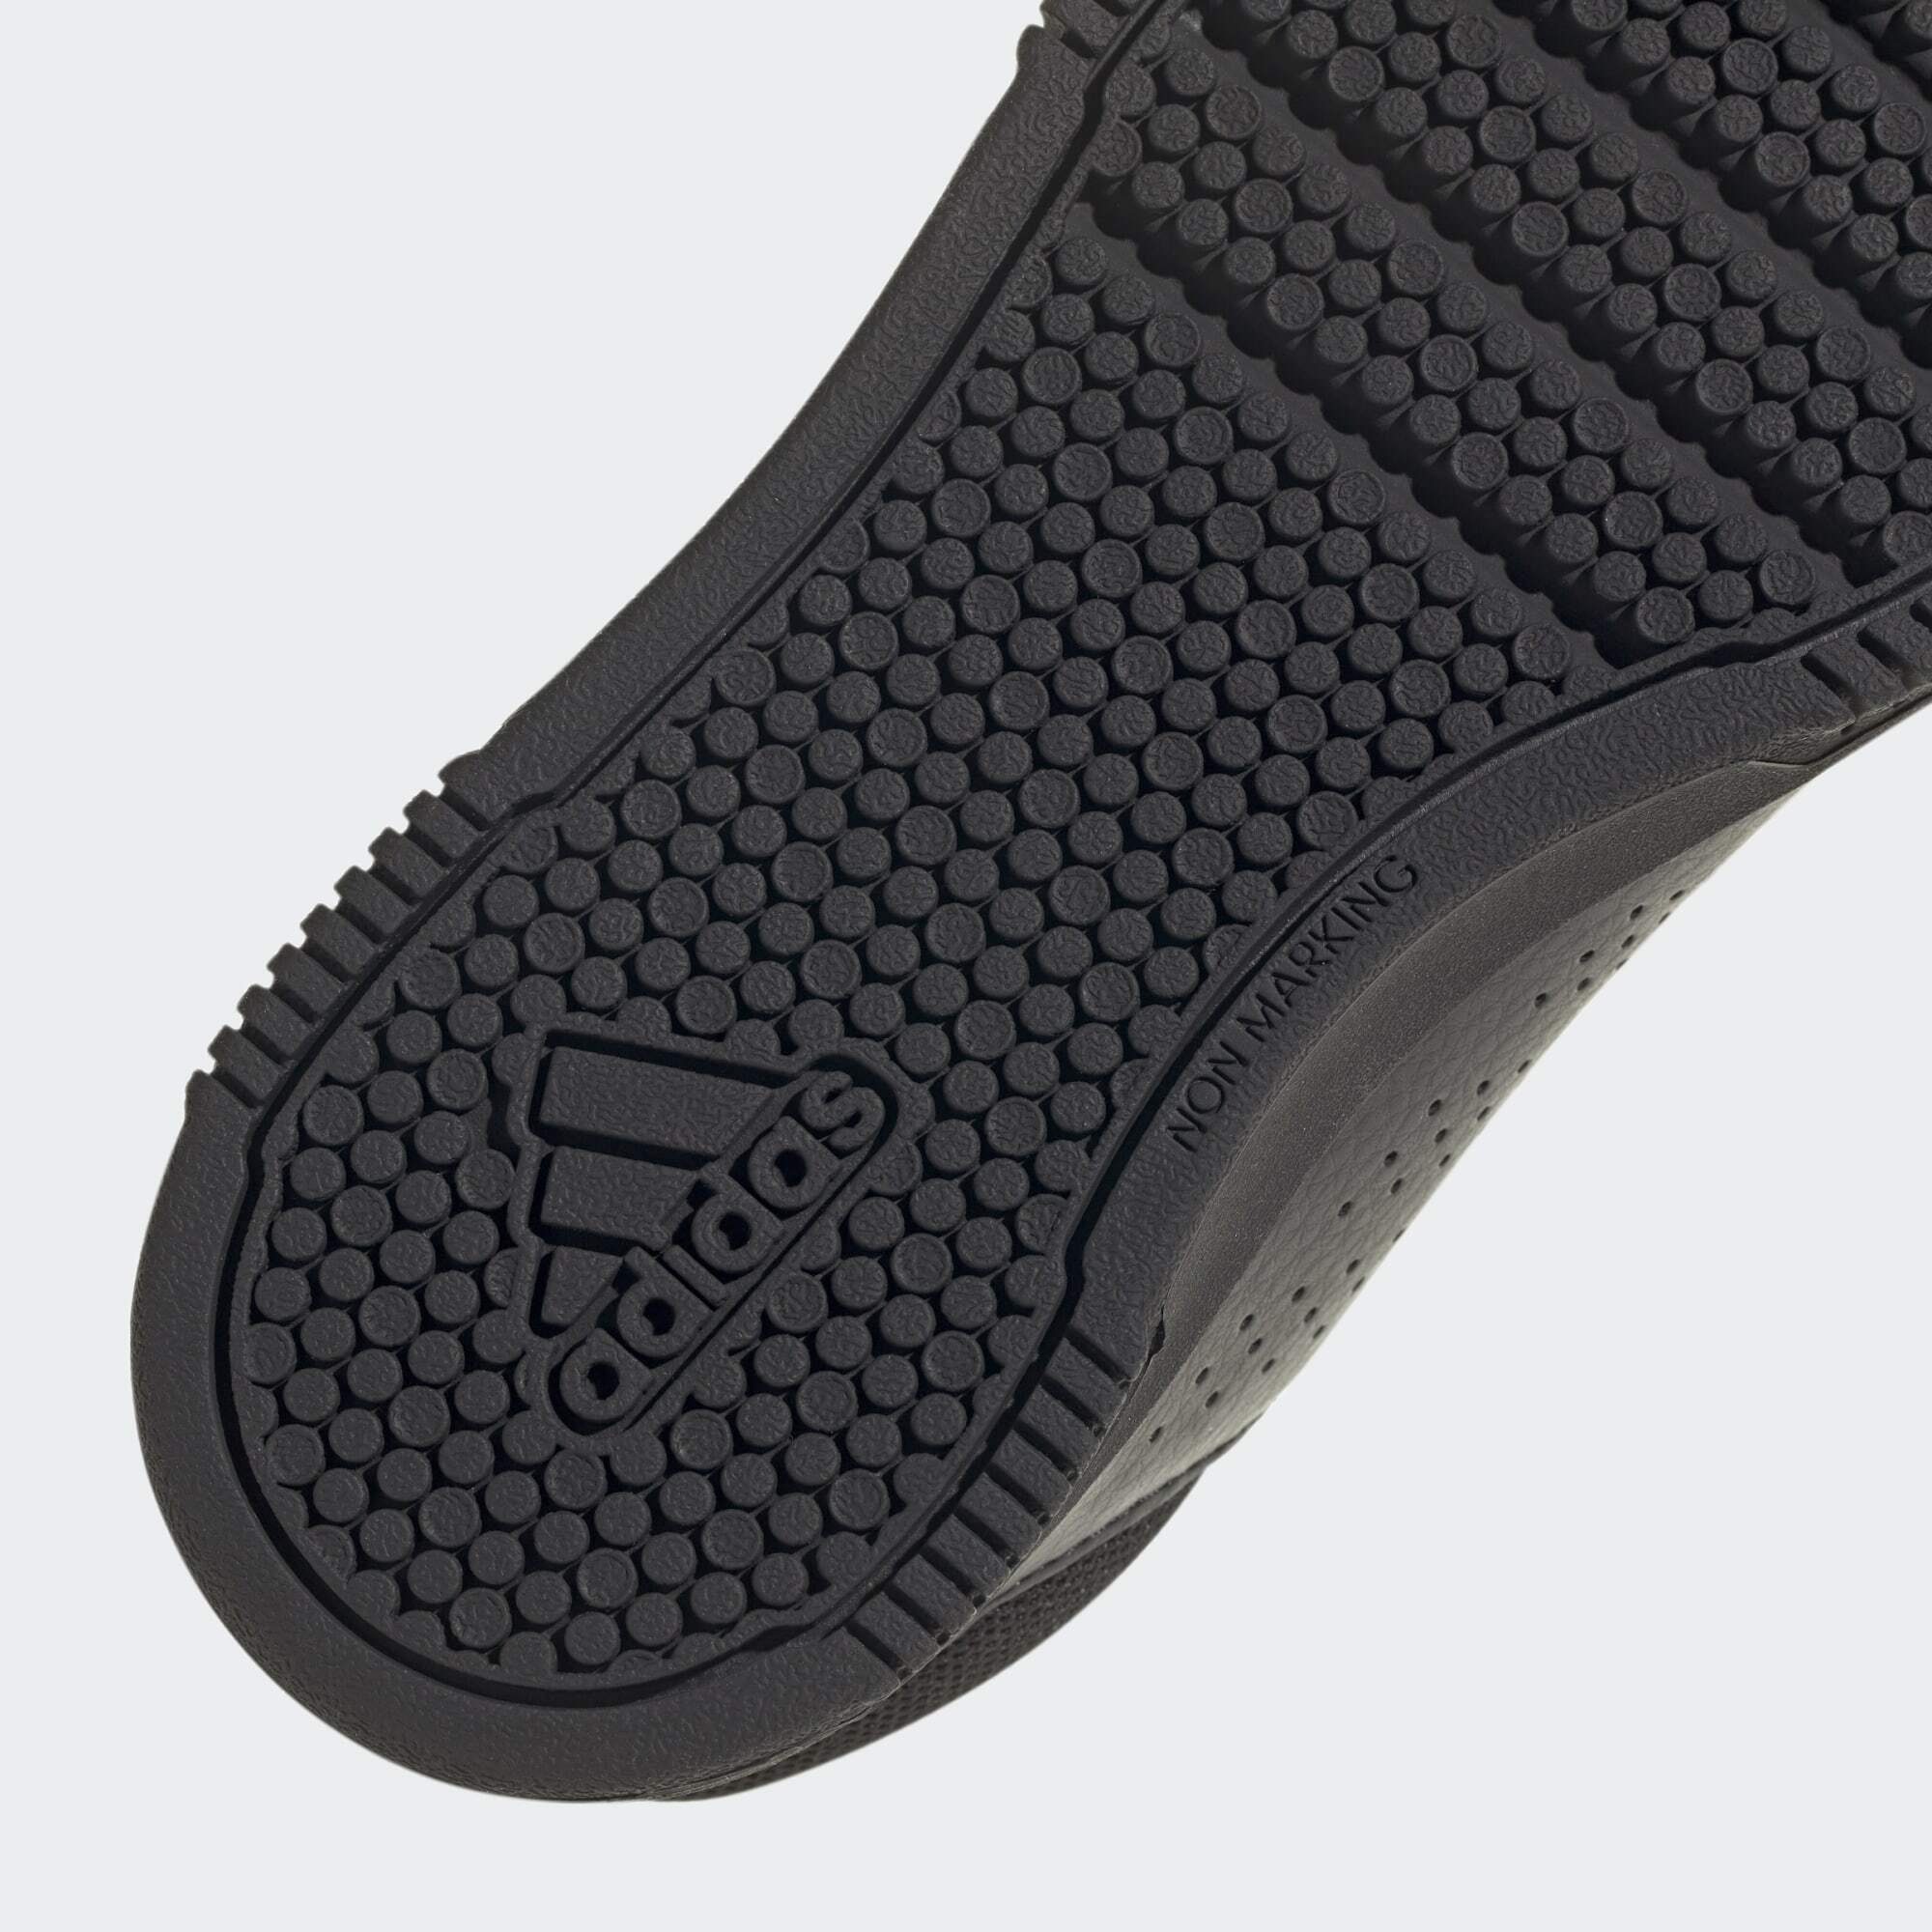 LOOP TENSAUR Six Grey Sneaker Core AND Black / HOOK / SCHUH Sportswear Black Core adidas